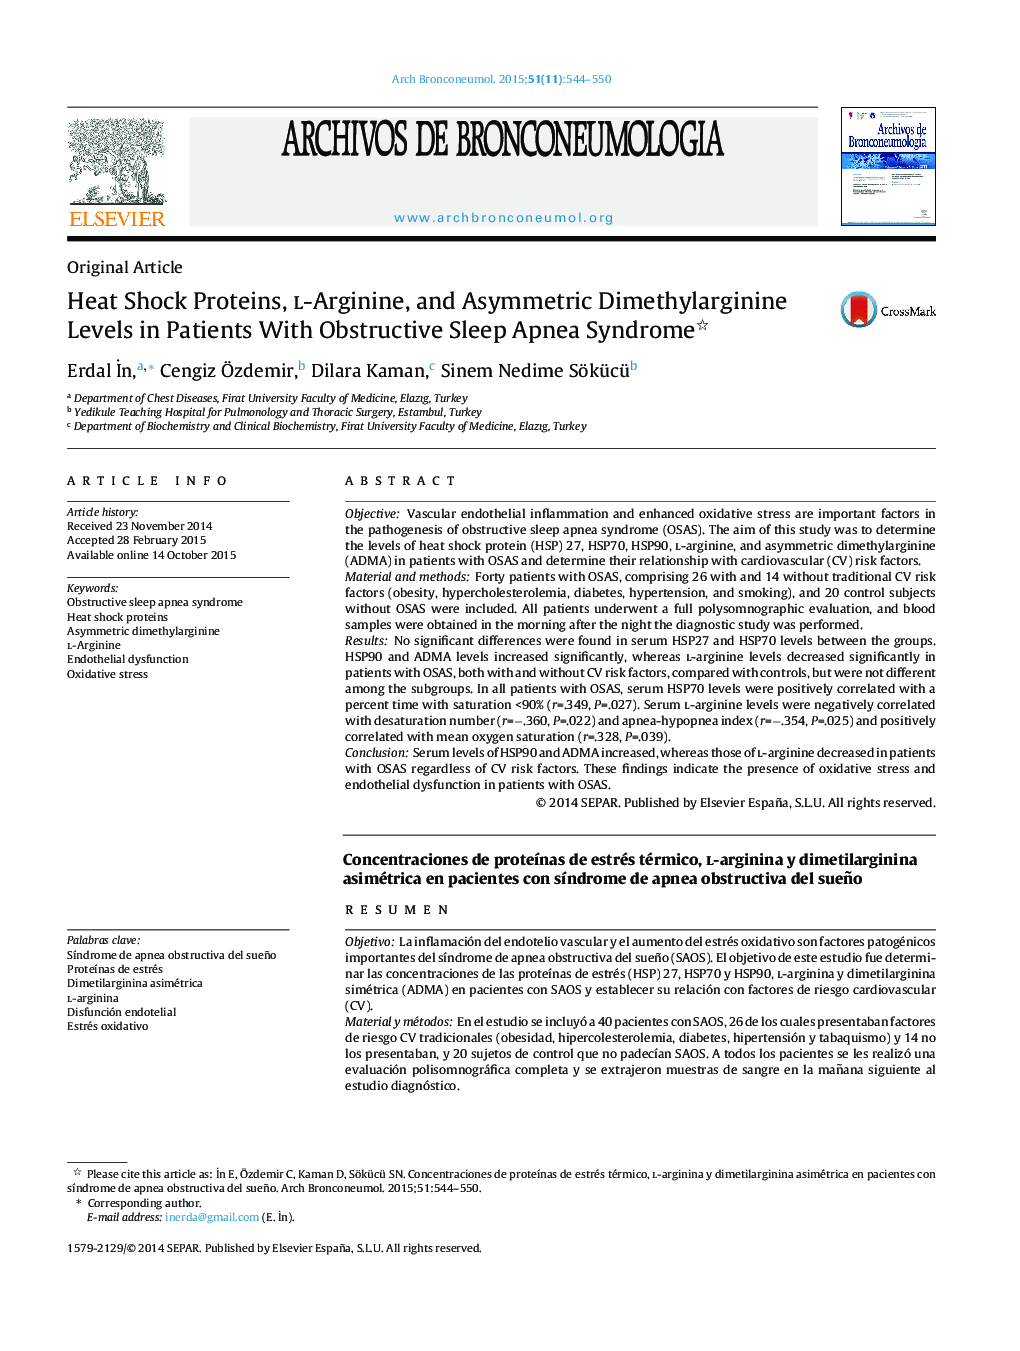 Heat Shock Proteins, l-Arginine, and Asymmetric Dimethylarginine Levels in Patients With Obstructive Sleep Apnea Syndrome 